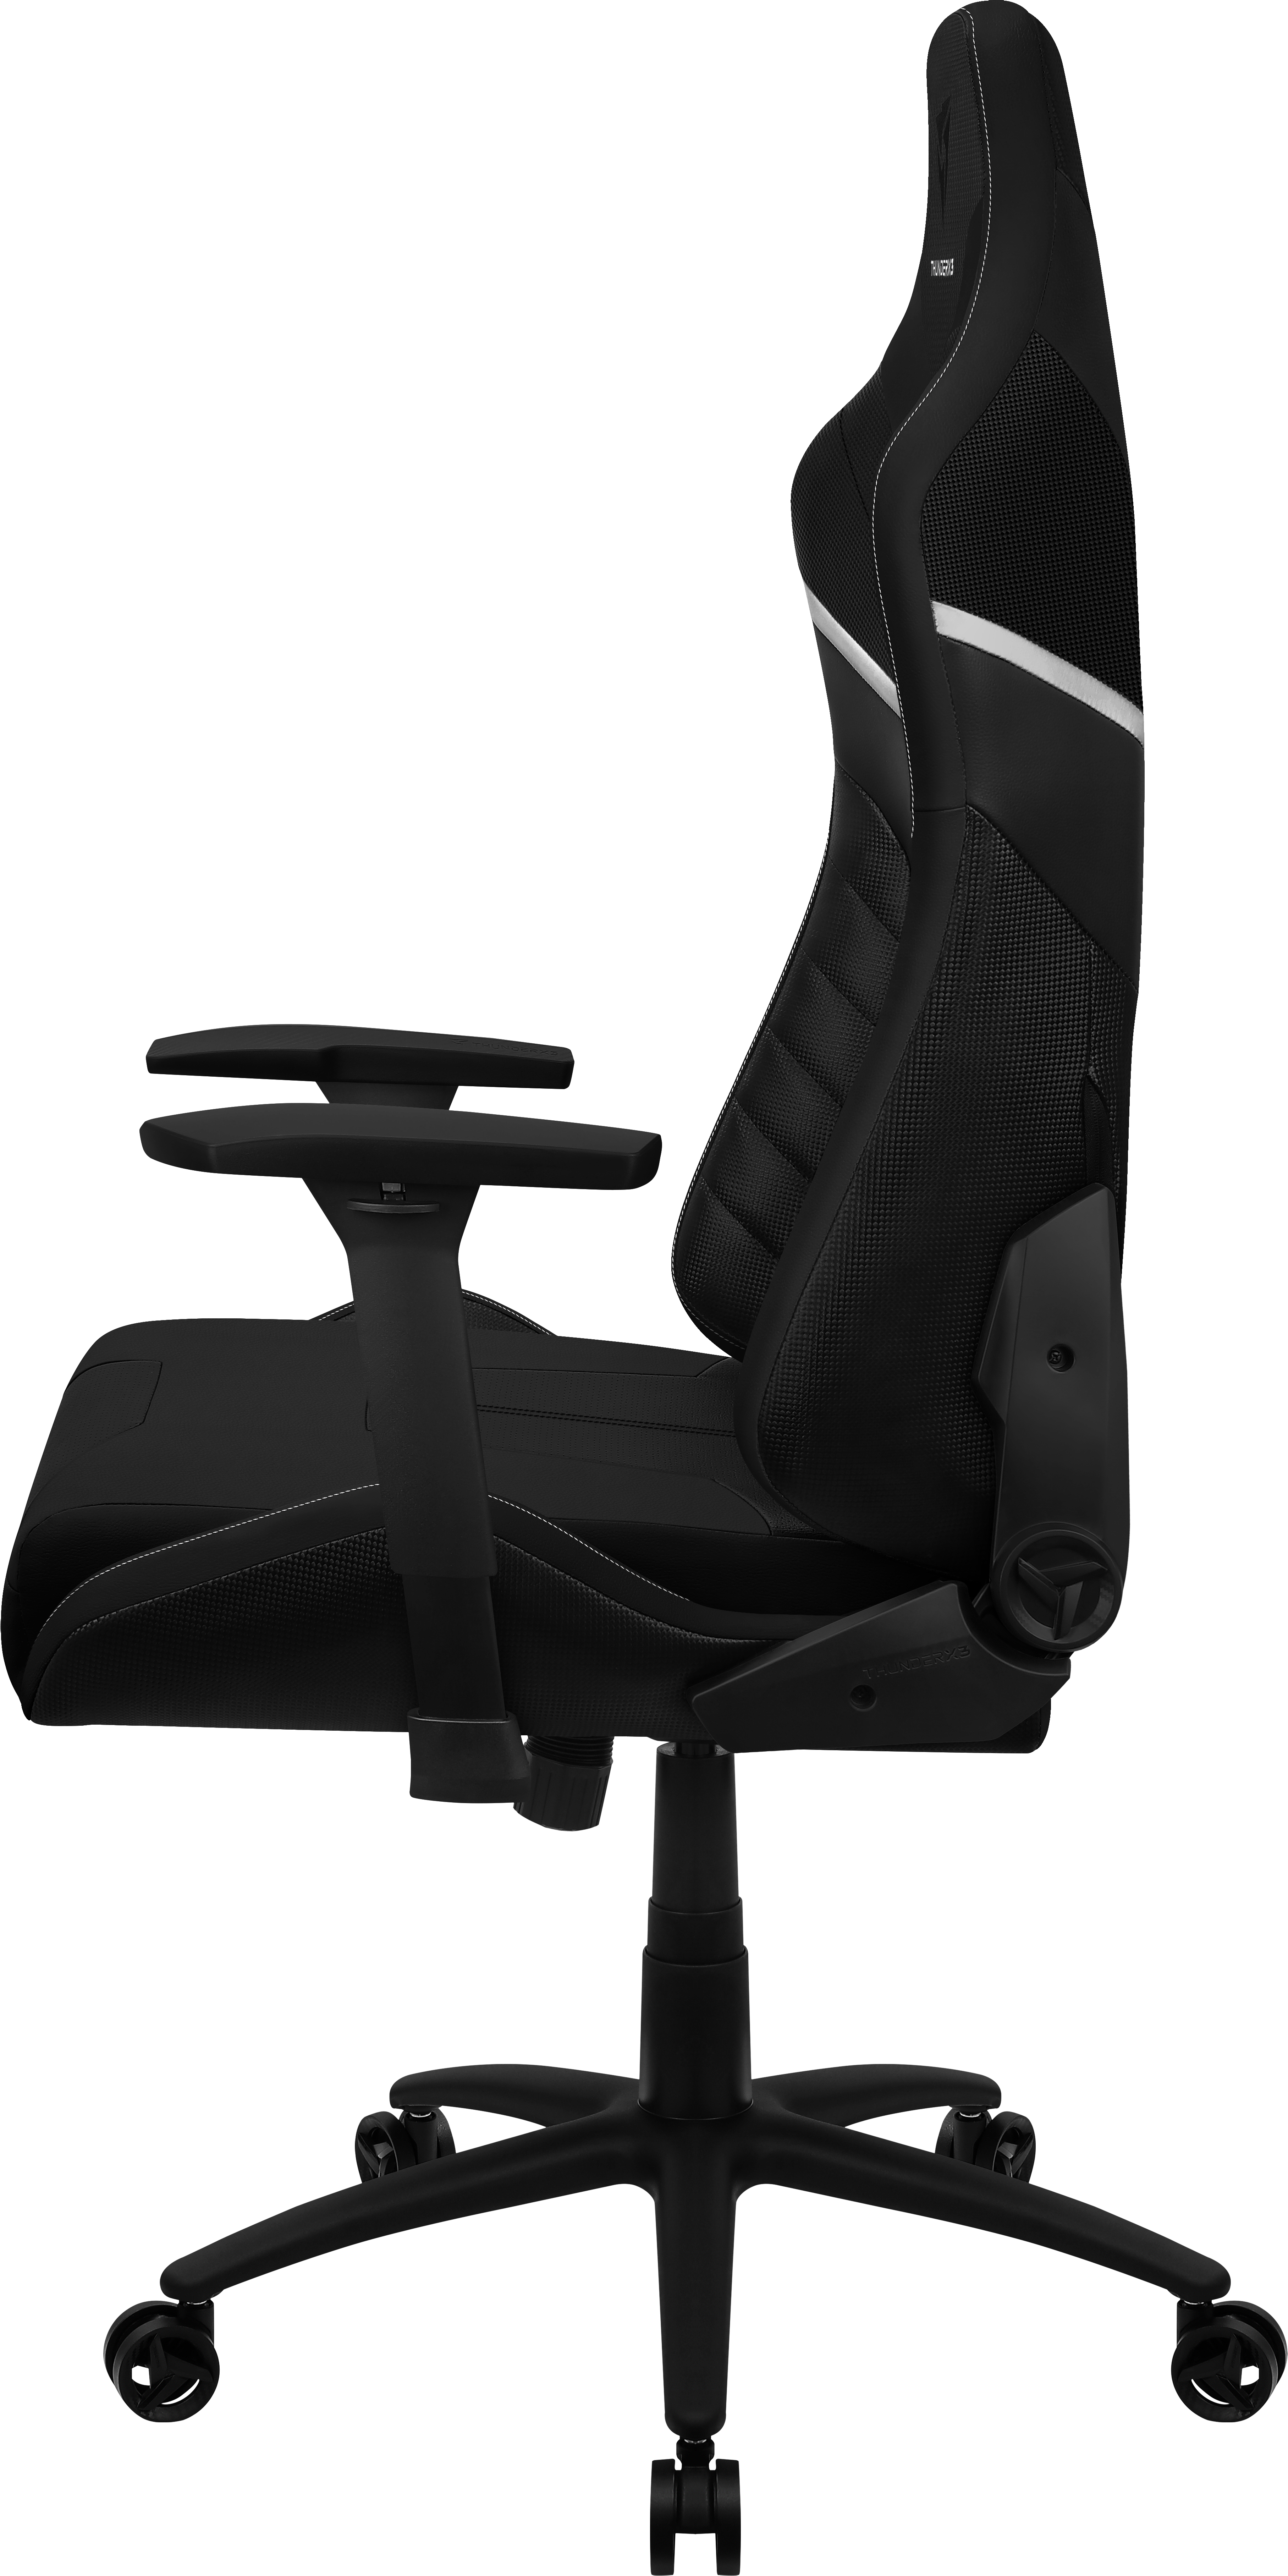 ThunderX3 - ThunderX3 TC5 MAX Gaming Chair - All Black